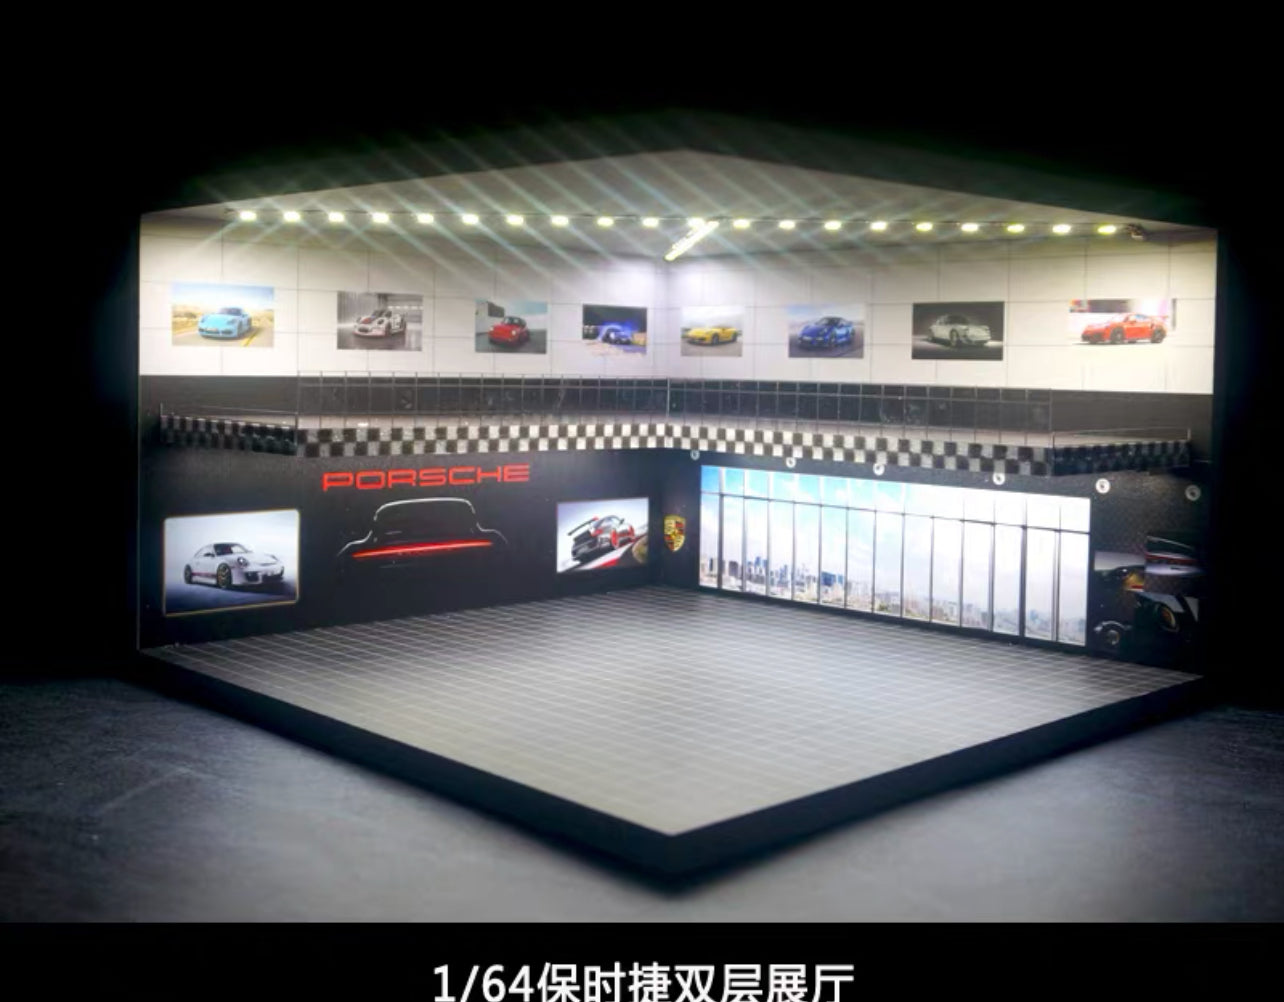 1/64 Porsche Showroom Diorama